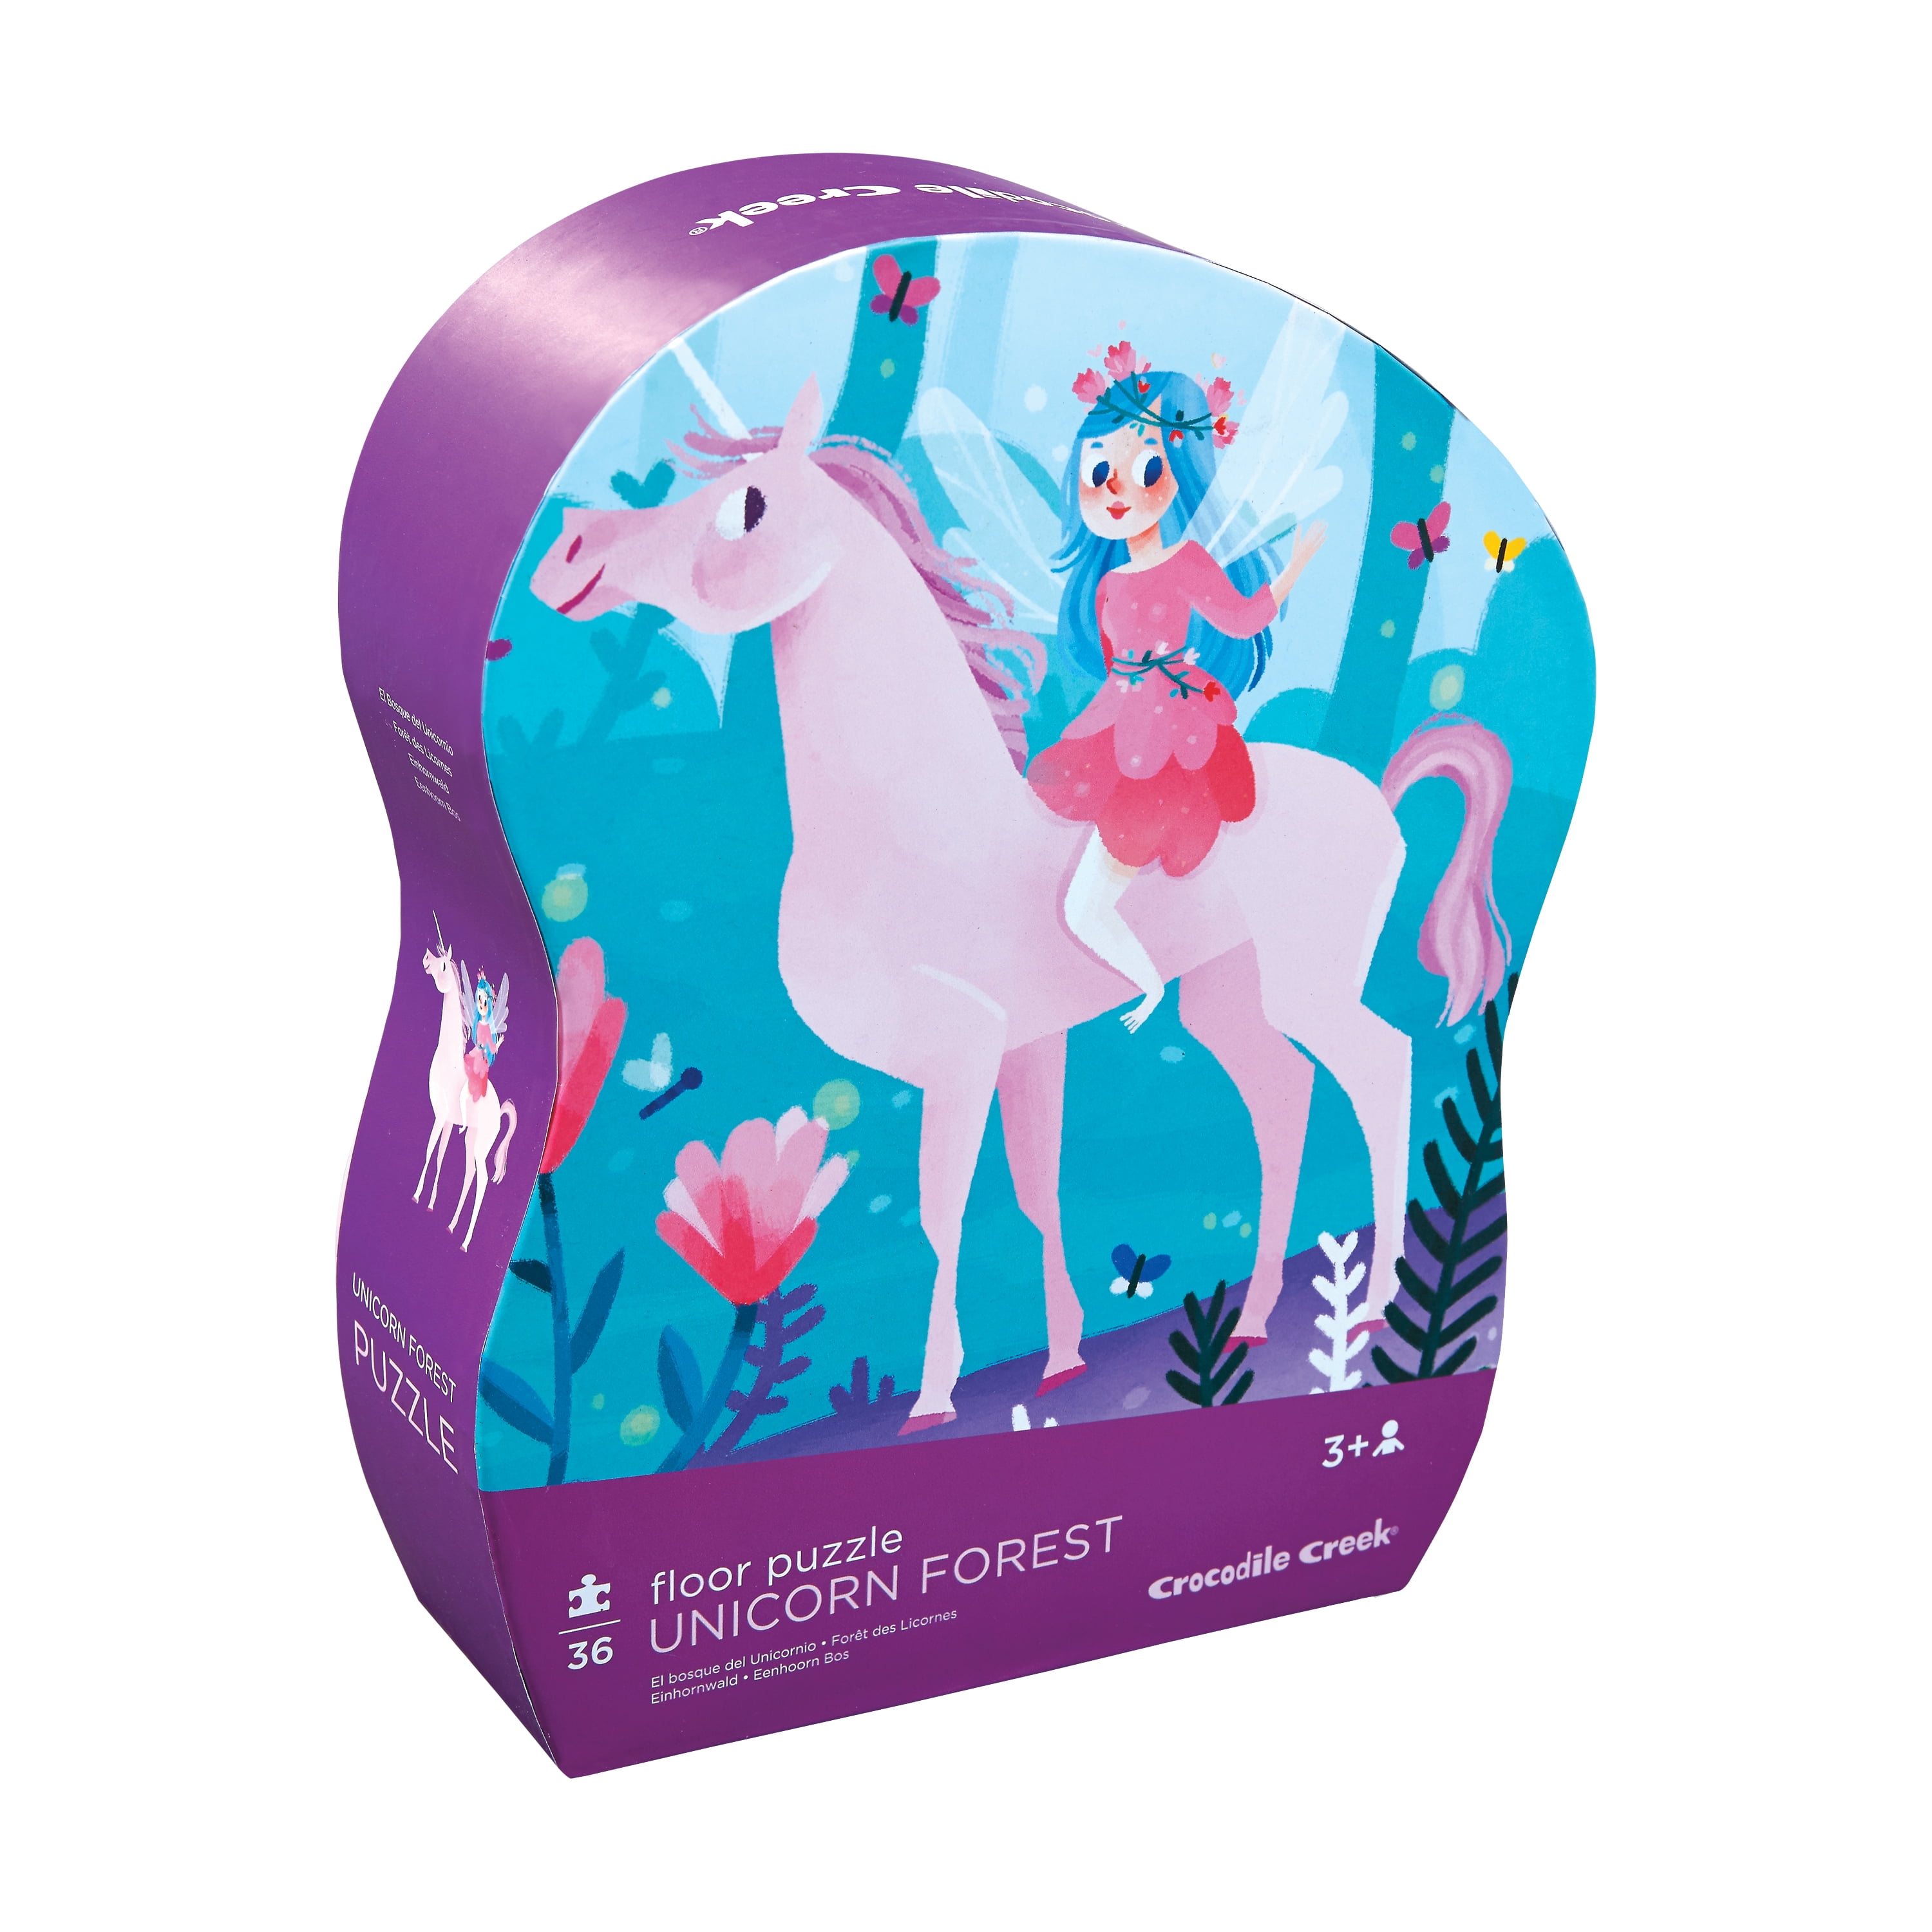 Fairytale 4 Jigsaw Puzzles In A Box Rainbows Mermaids Ballerinas. Unicorns 